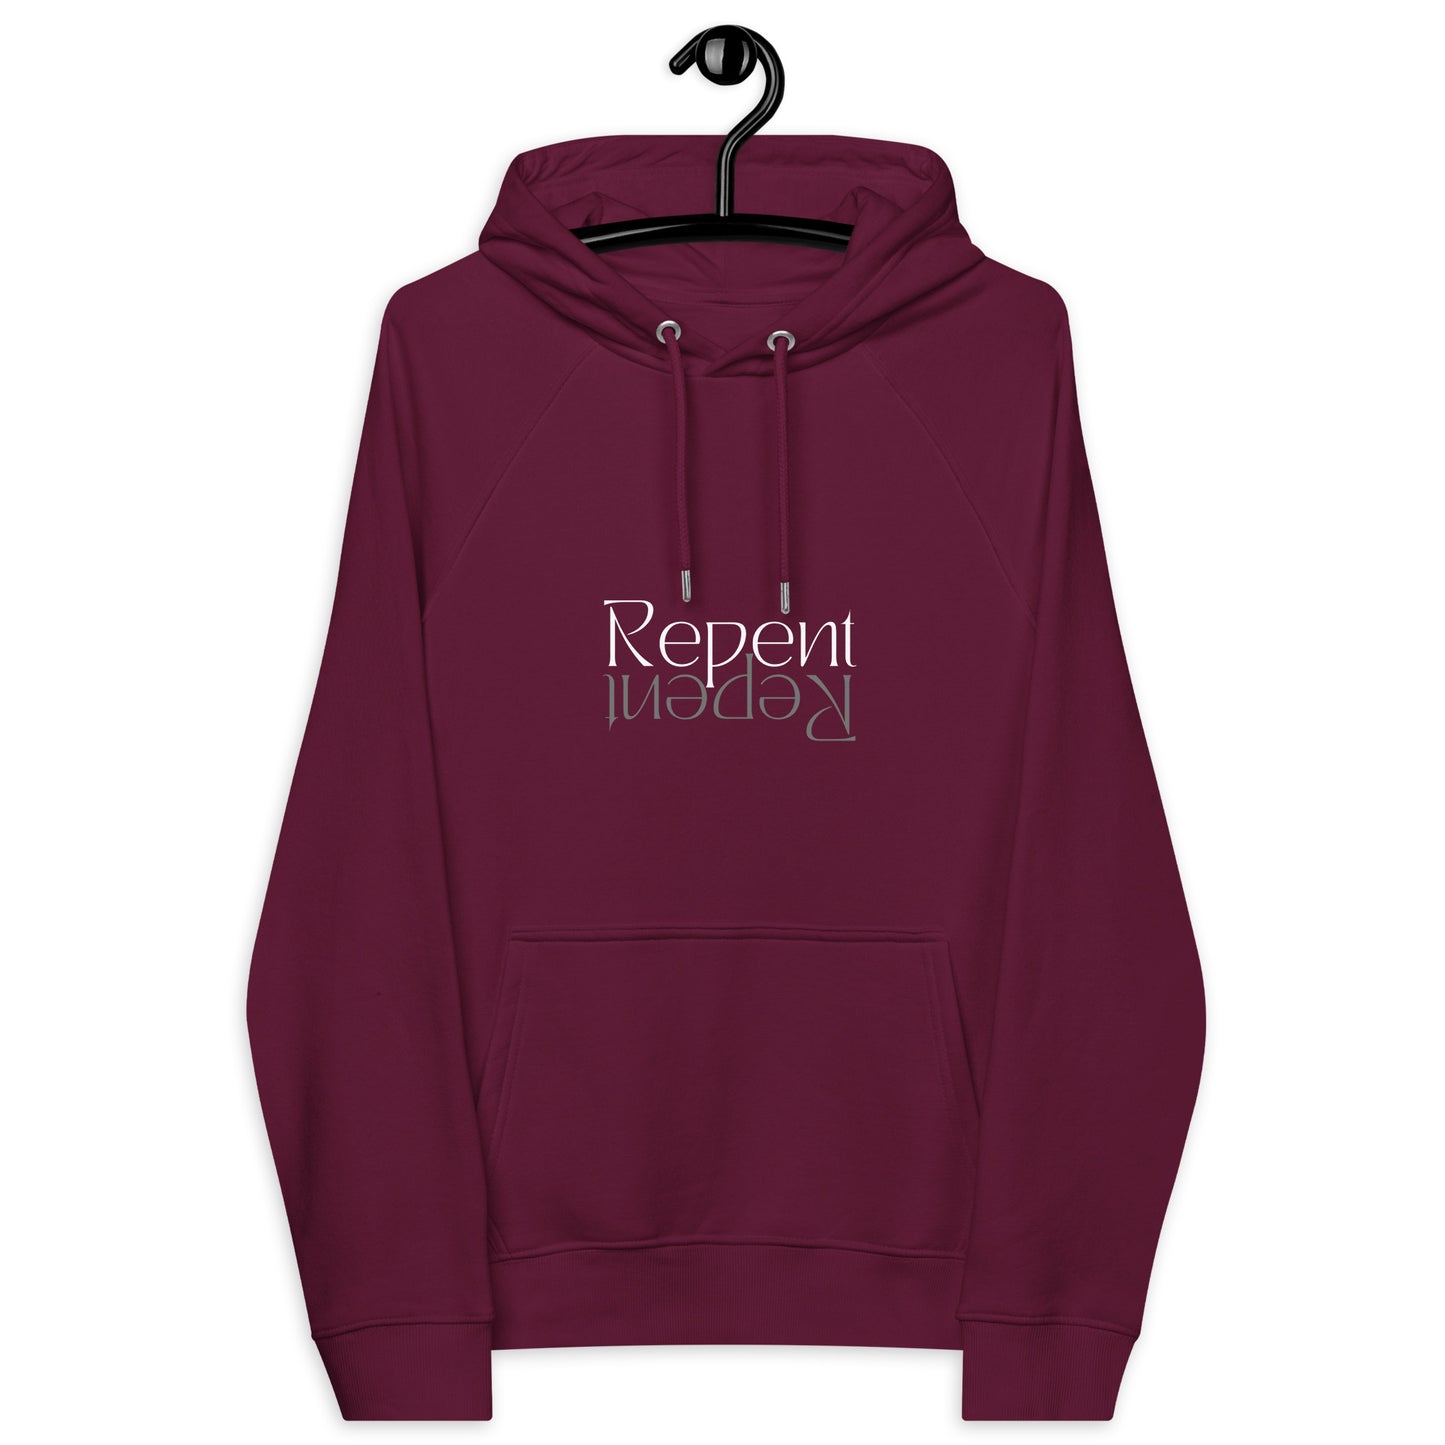 Repent Inverse Reflect eco raglan hoodie